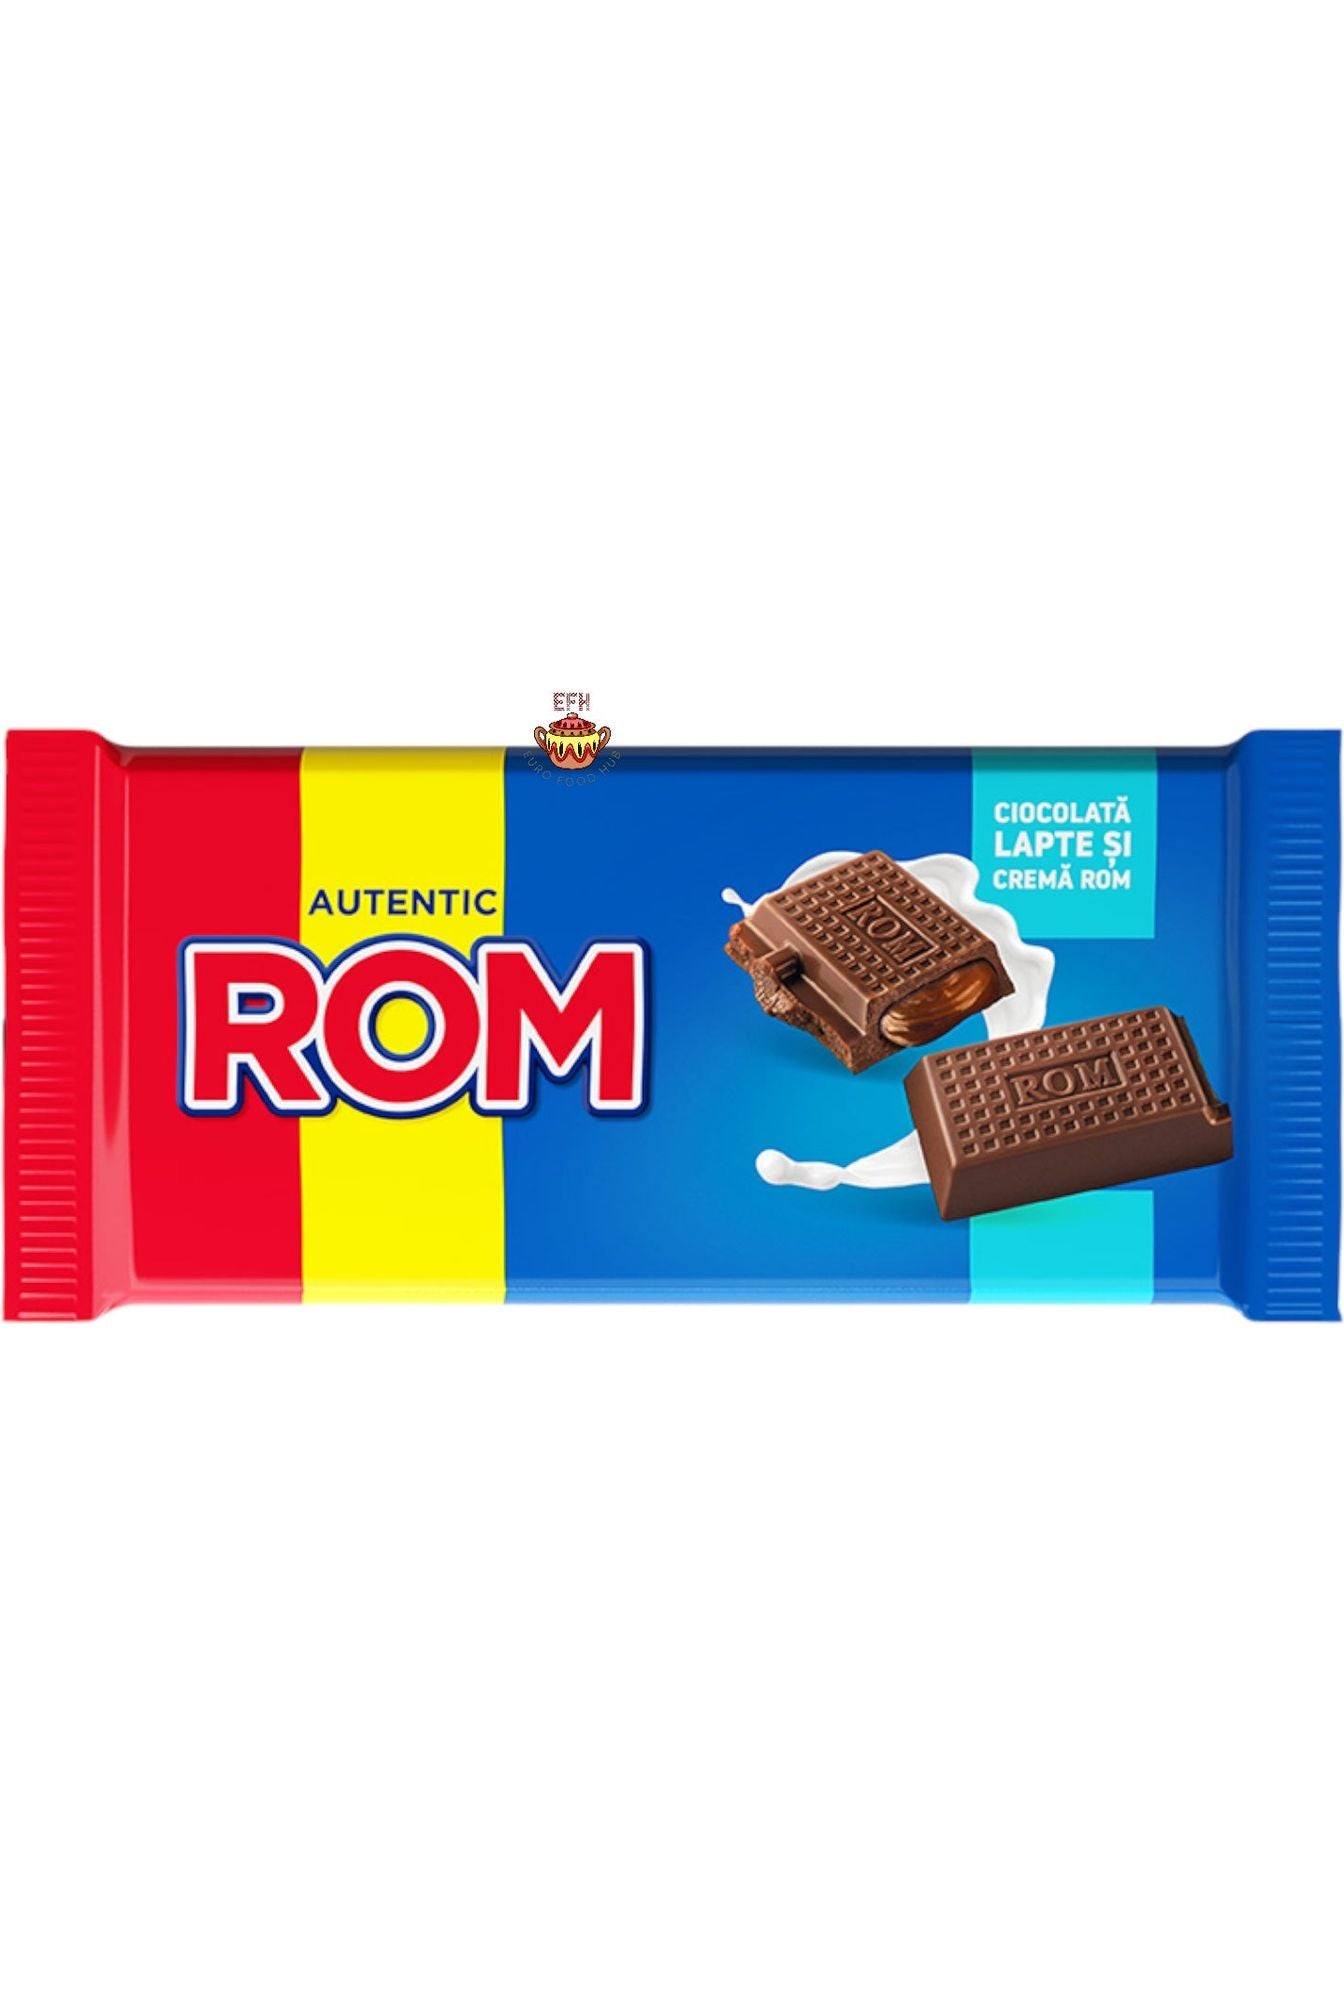 Romanian Chocolate Bar - AUTENTIC ROM - MILK - Ciocolata Lapte Si Crema Rom